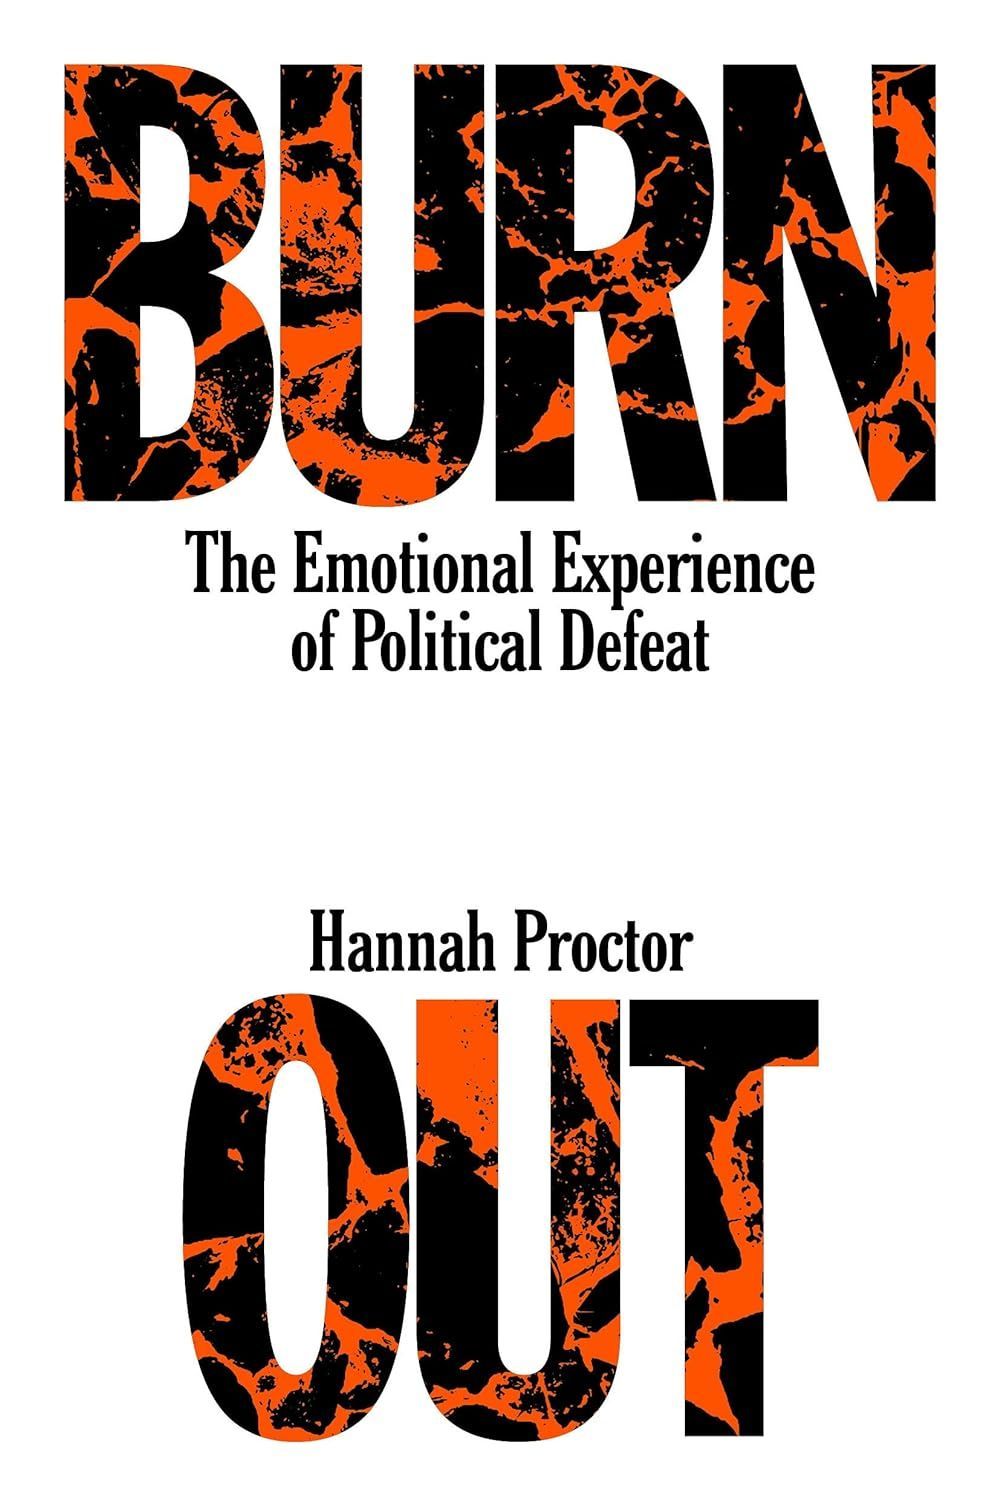 Falling Apart Together: On Hannah Proctor’s “Burnout”